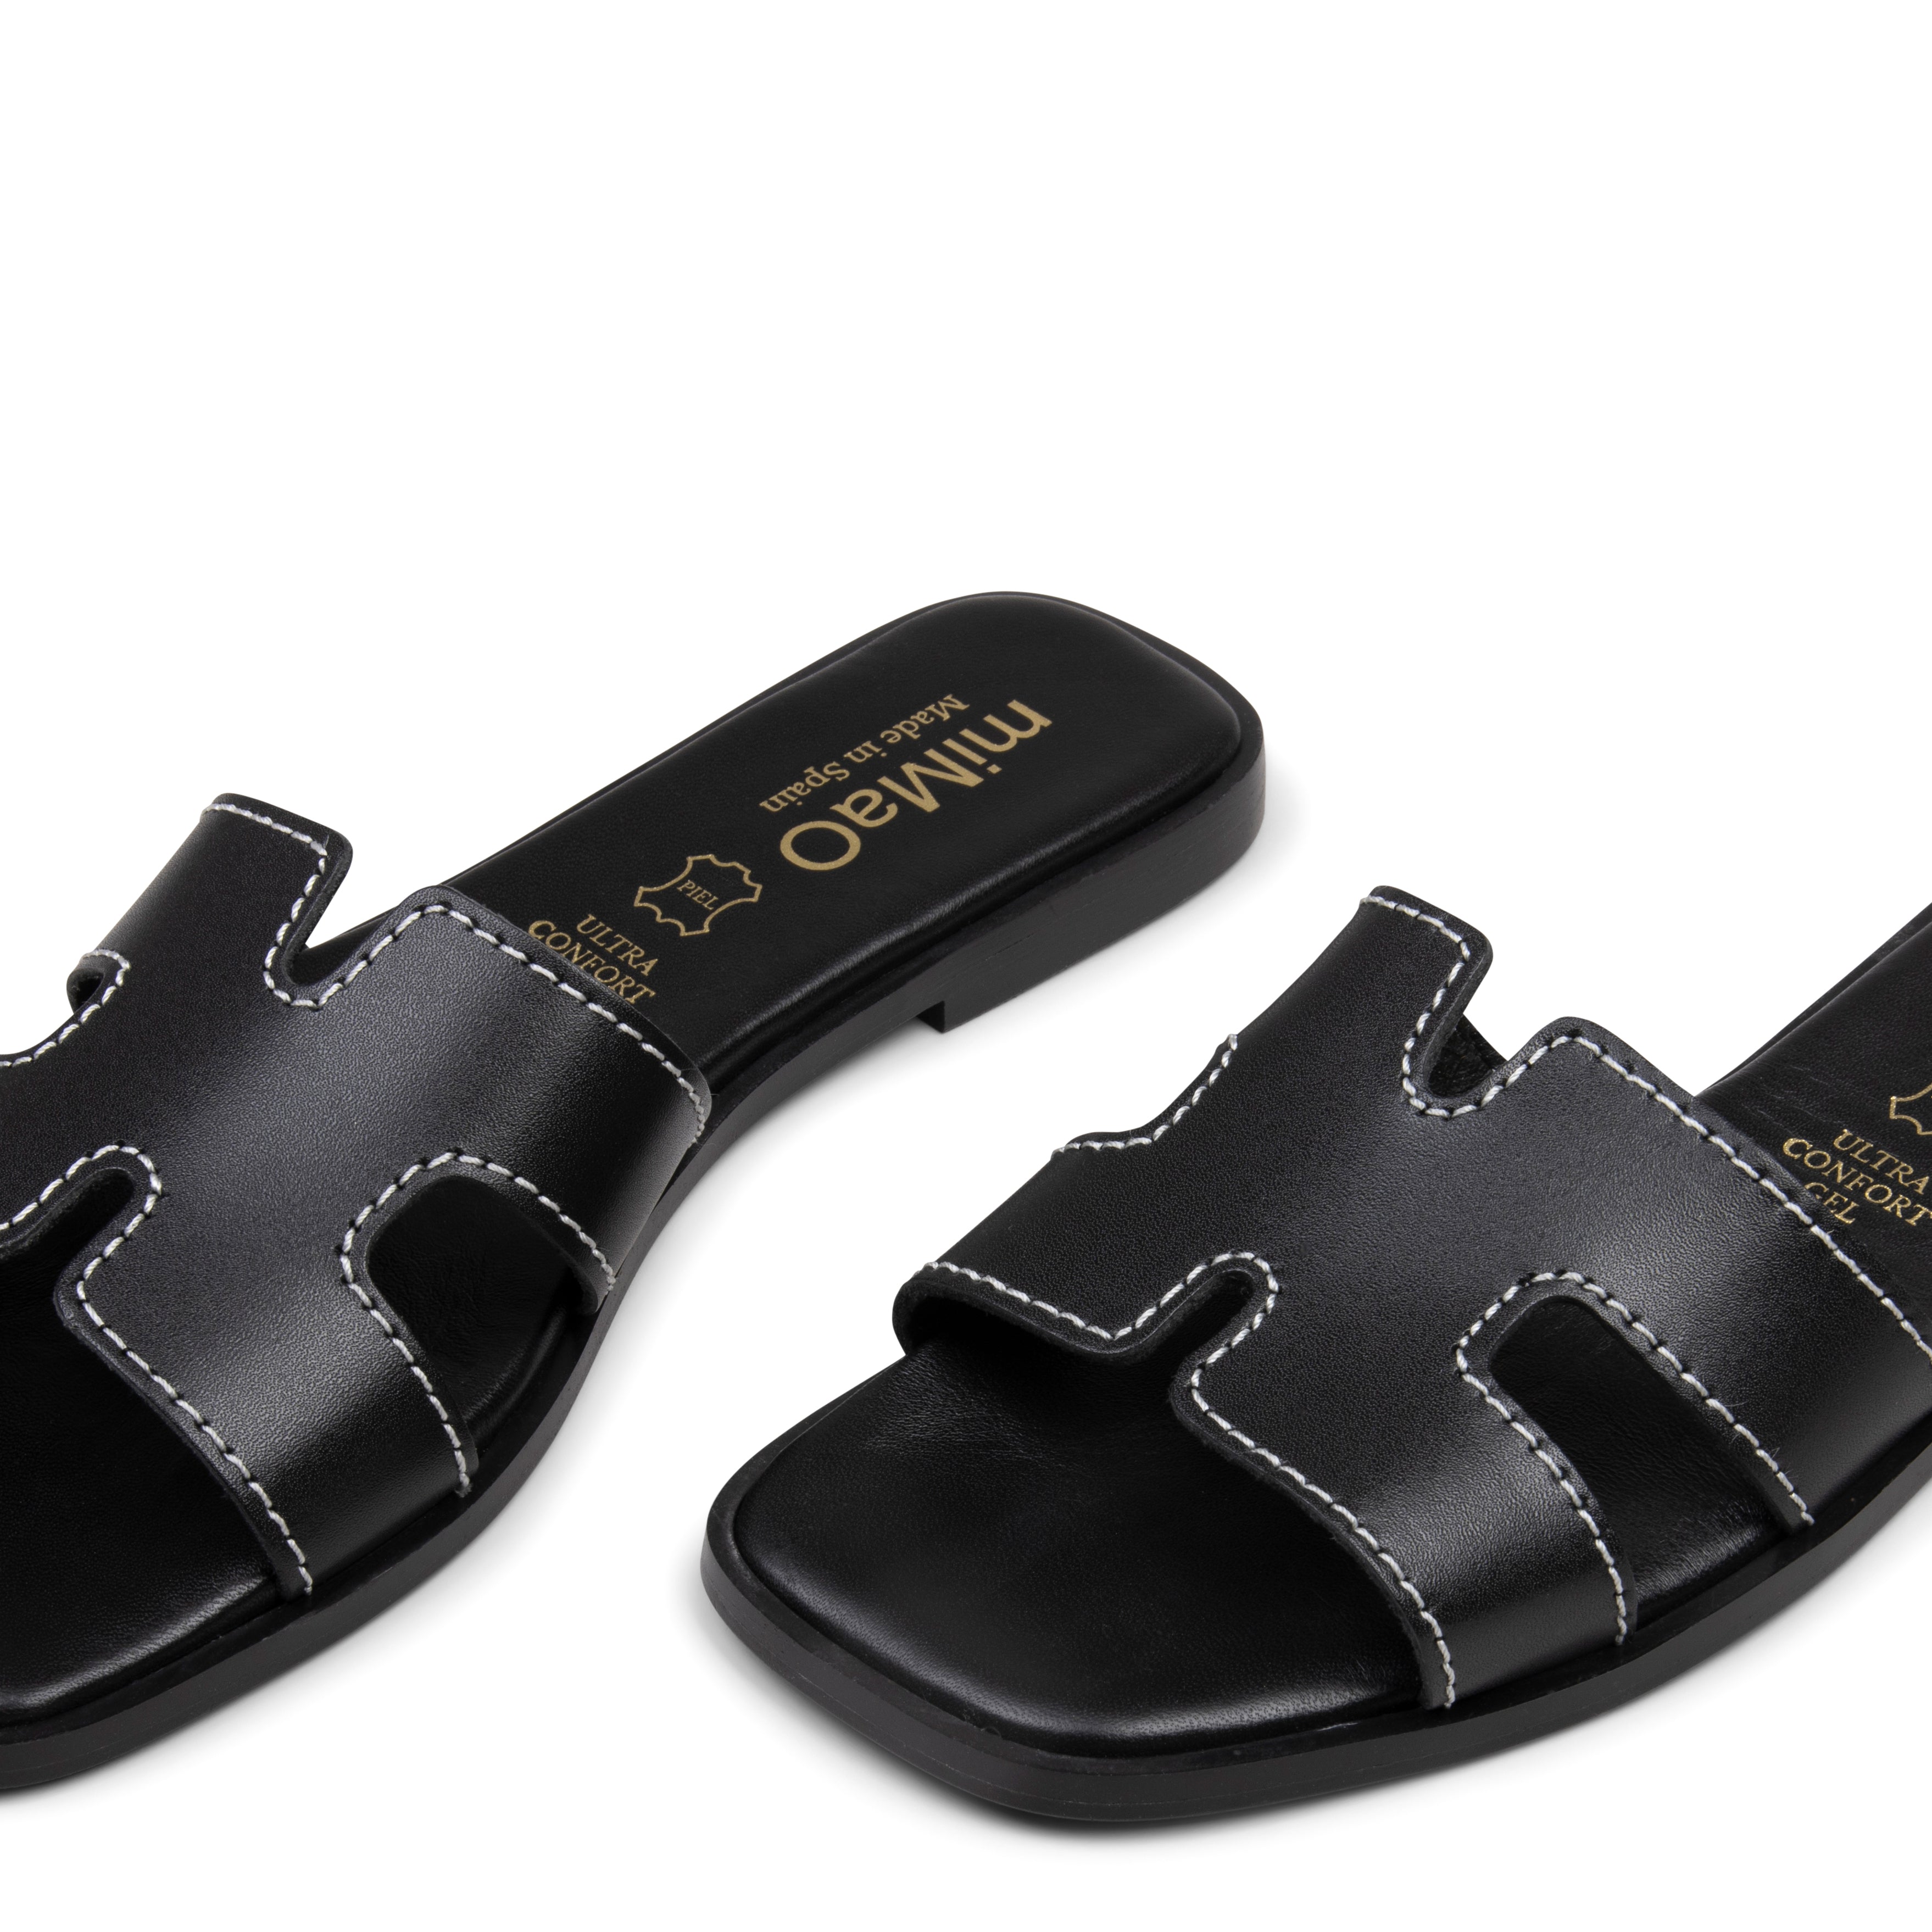 LUXOR – BLACK Flat Sandals